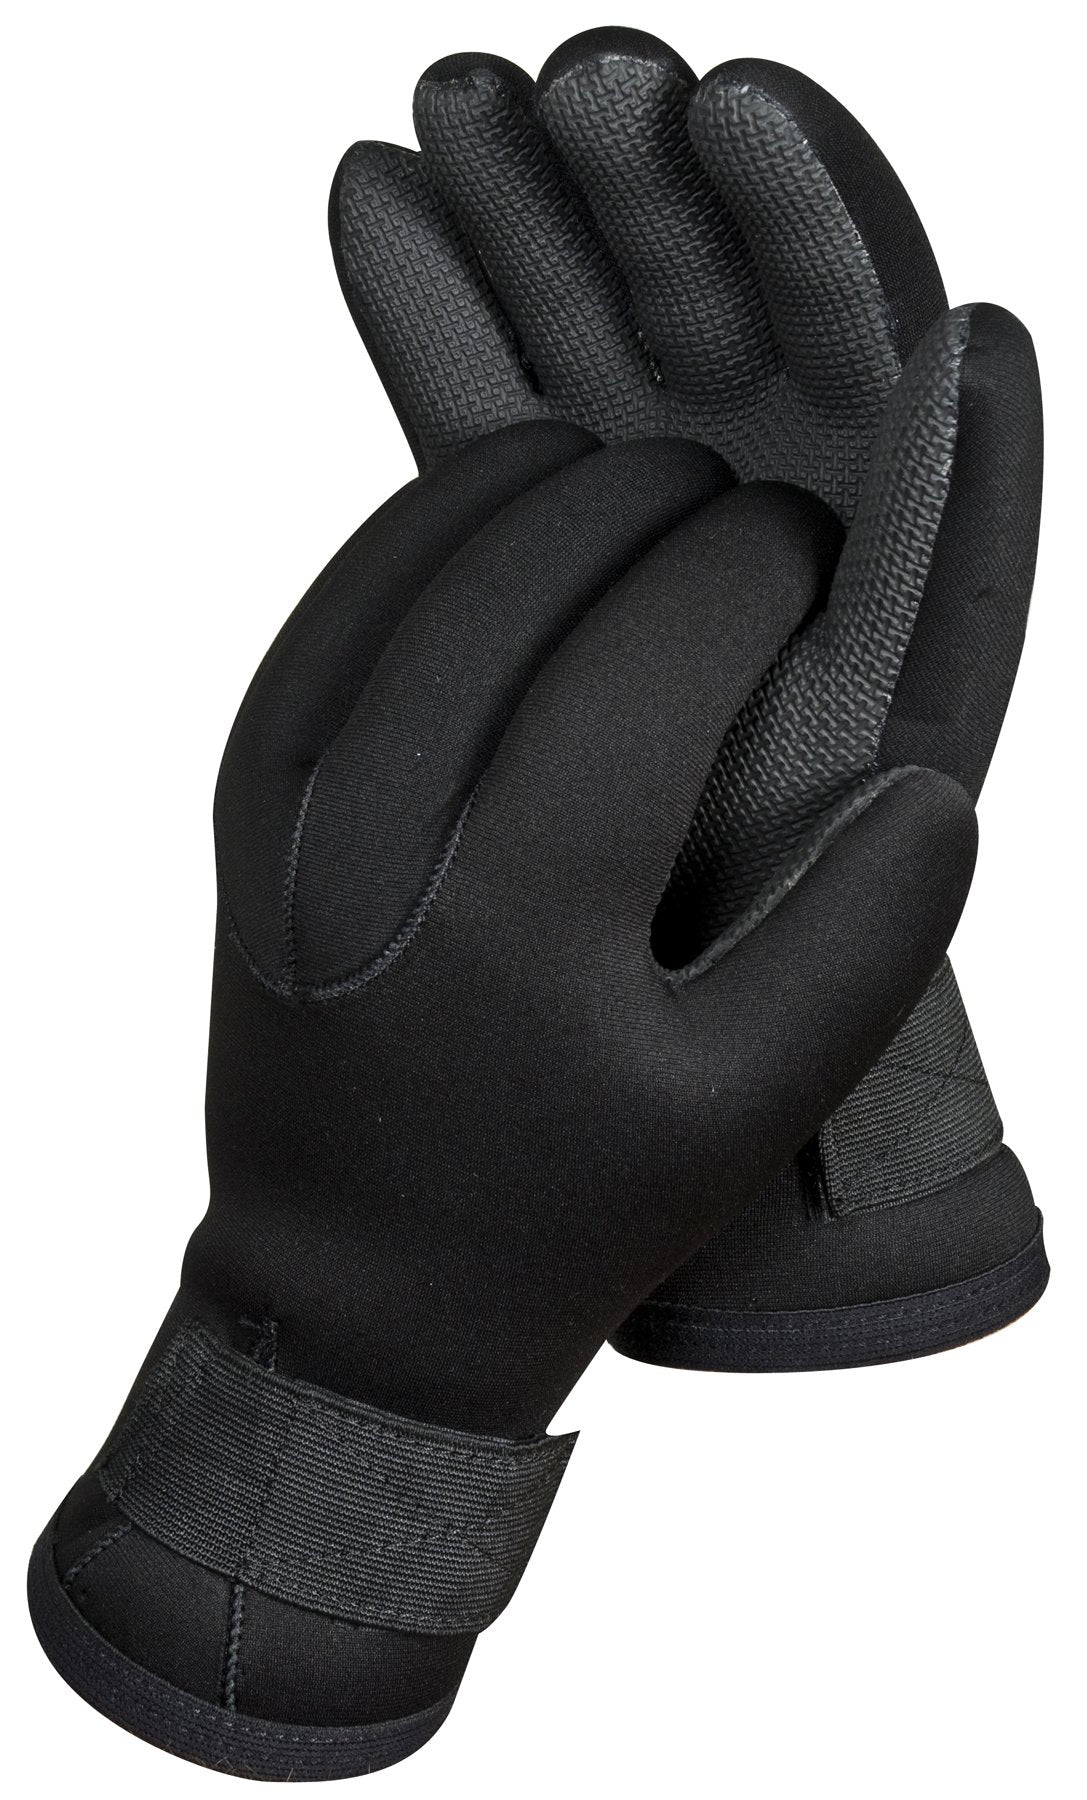 Celsius Deluxe Neoprene/Fleece DNG-L Fishing Gloves Water Resistant/Large/Black